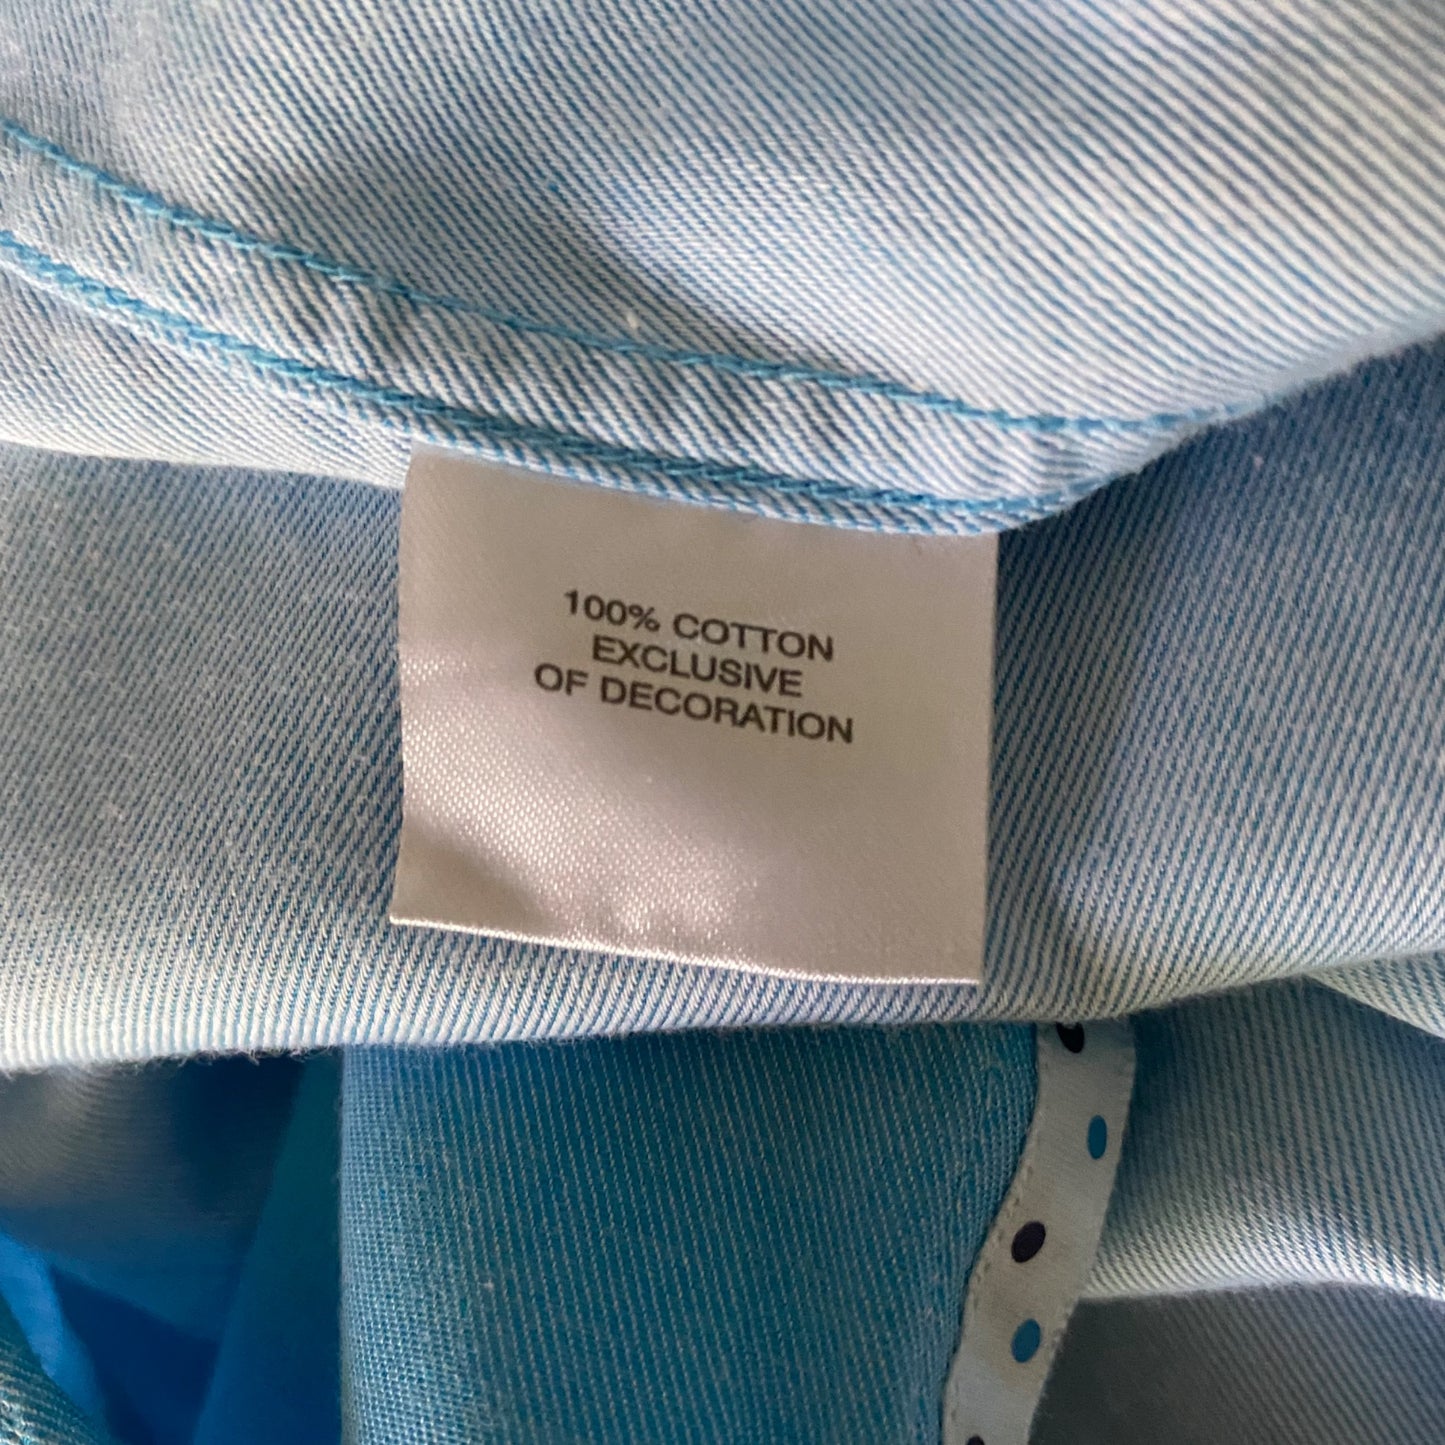 Tailorbyrd sz XL 100% Cotton Long sleeve men's button-down front business shirt